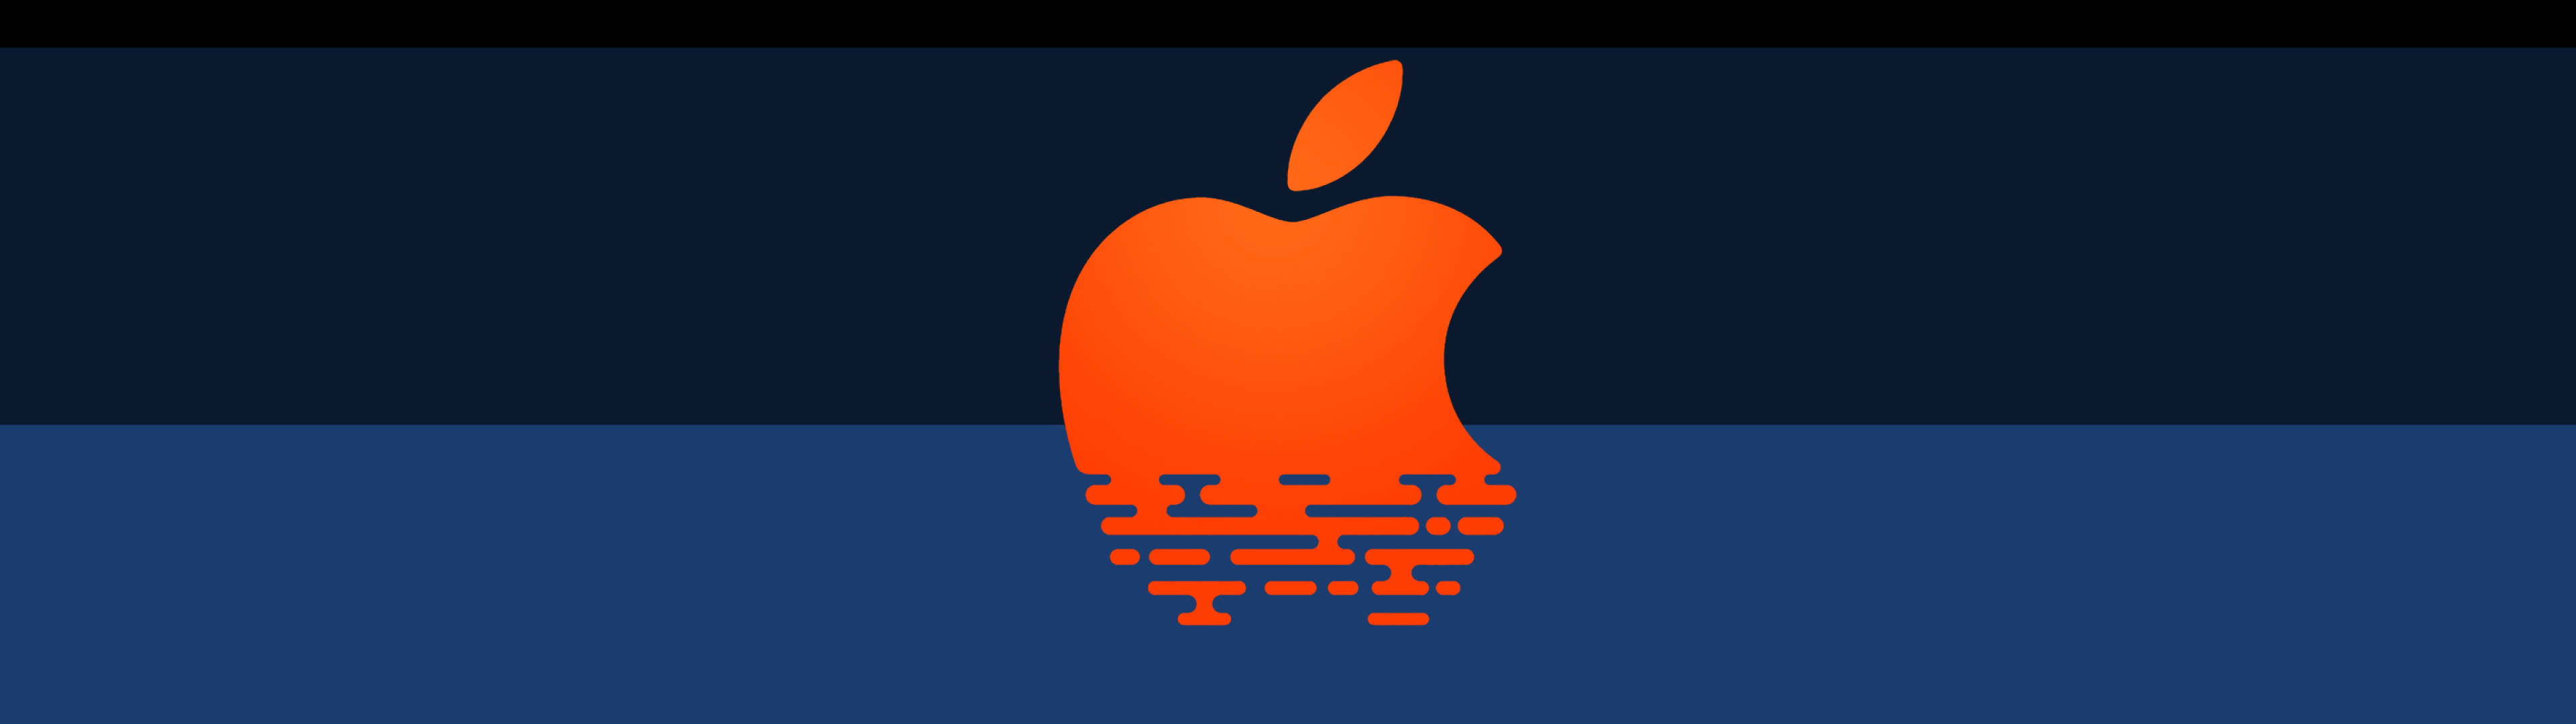 3840x1080 Resolution Apple Store Logo Art 3840x1080 Resolution ...